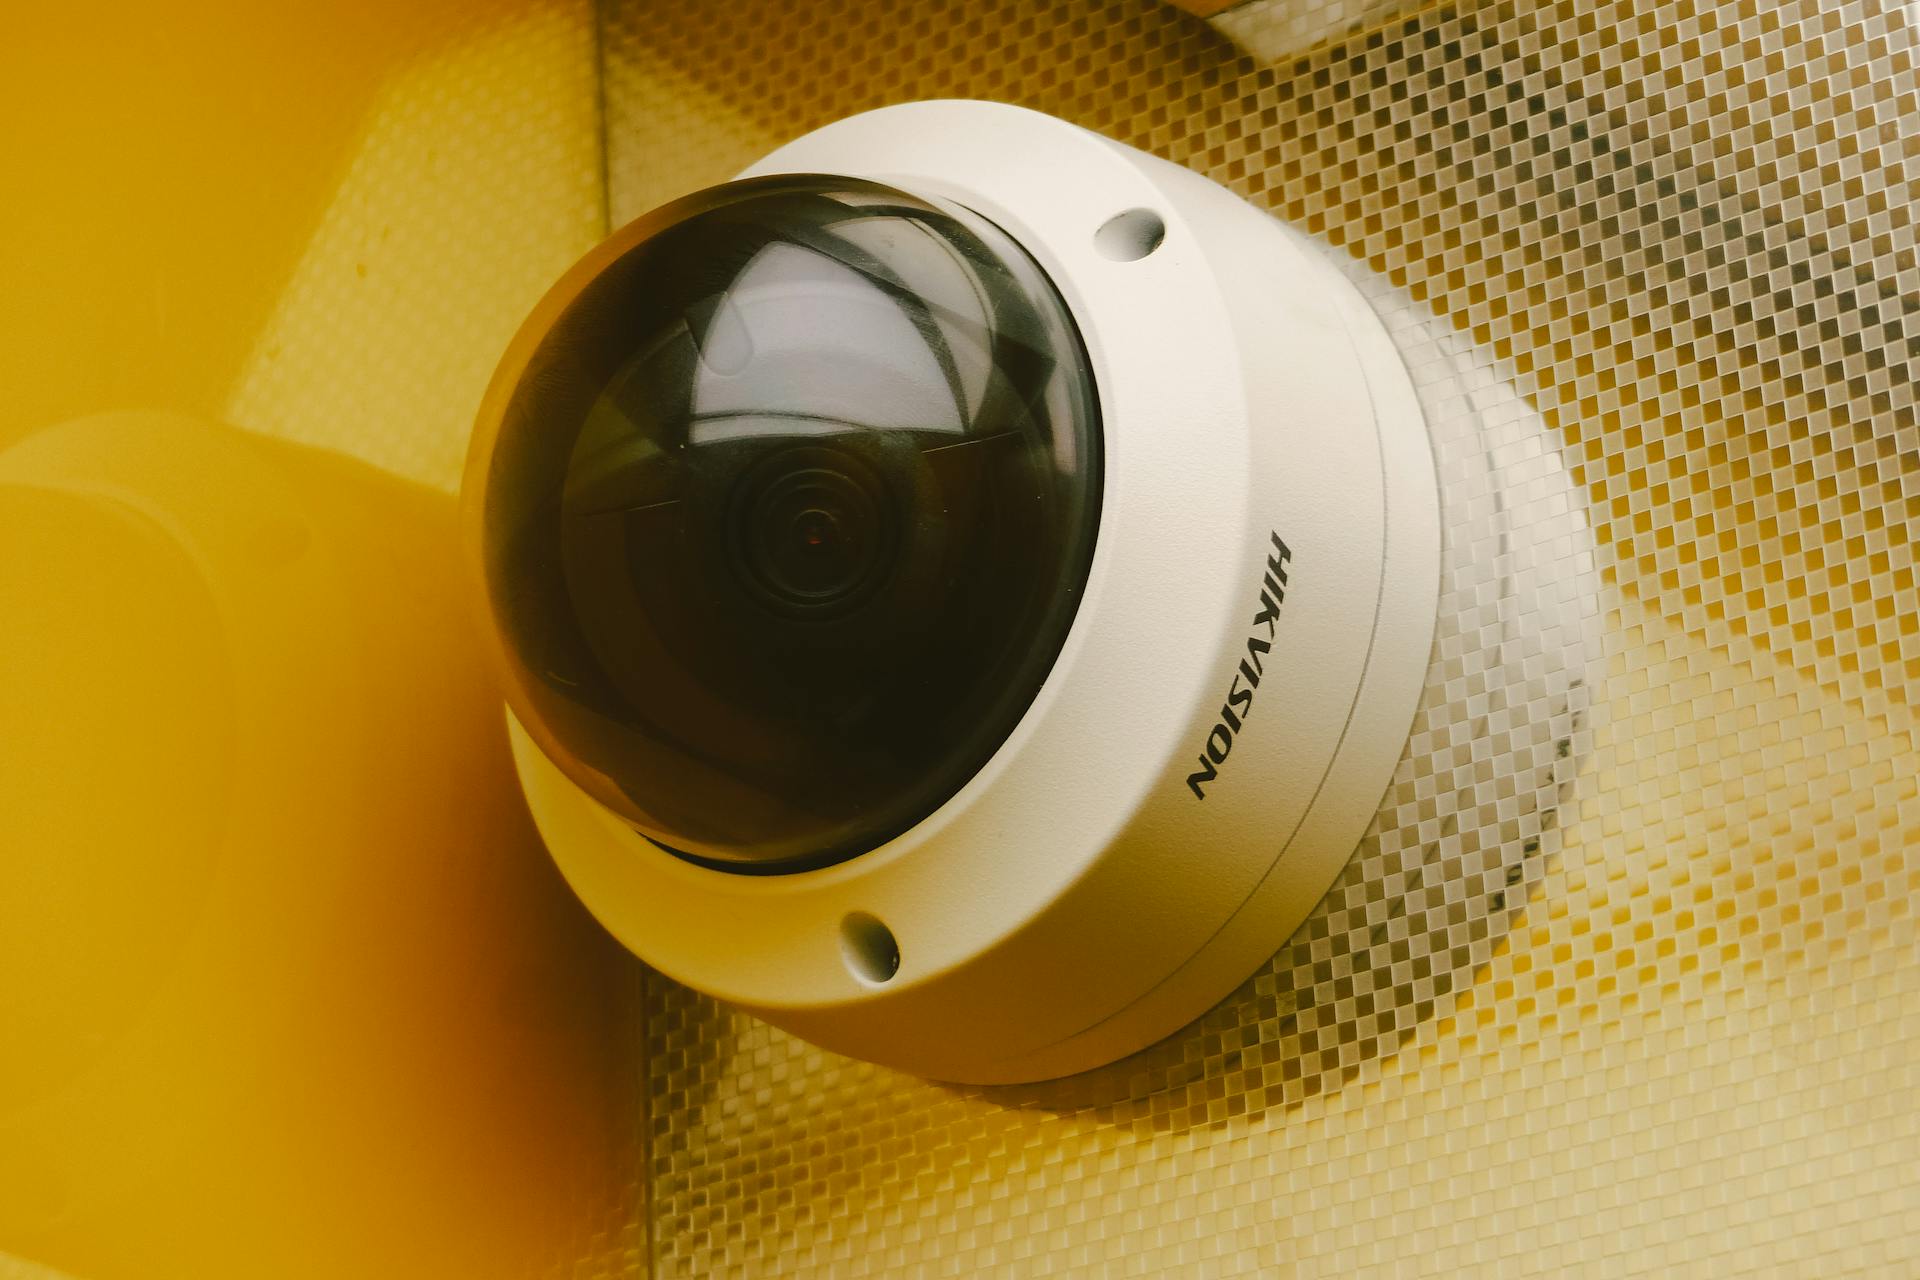 A modern equipment for video surveillance on a wall | Source: Pexels